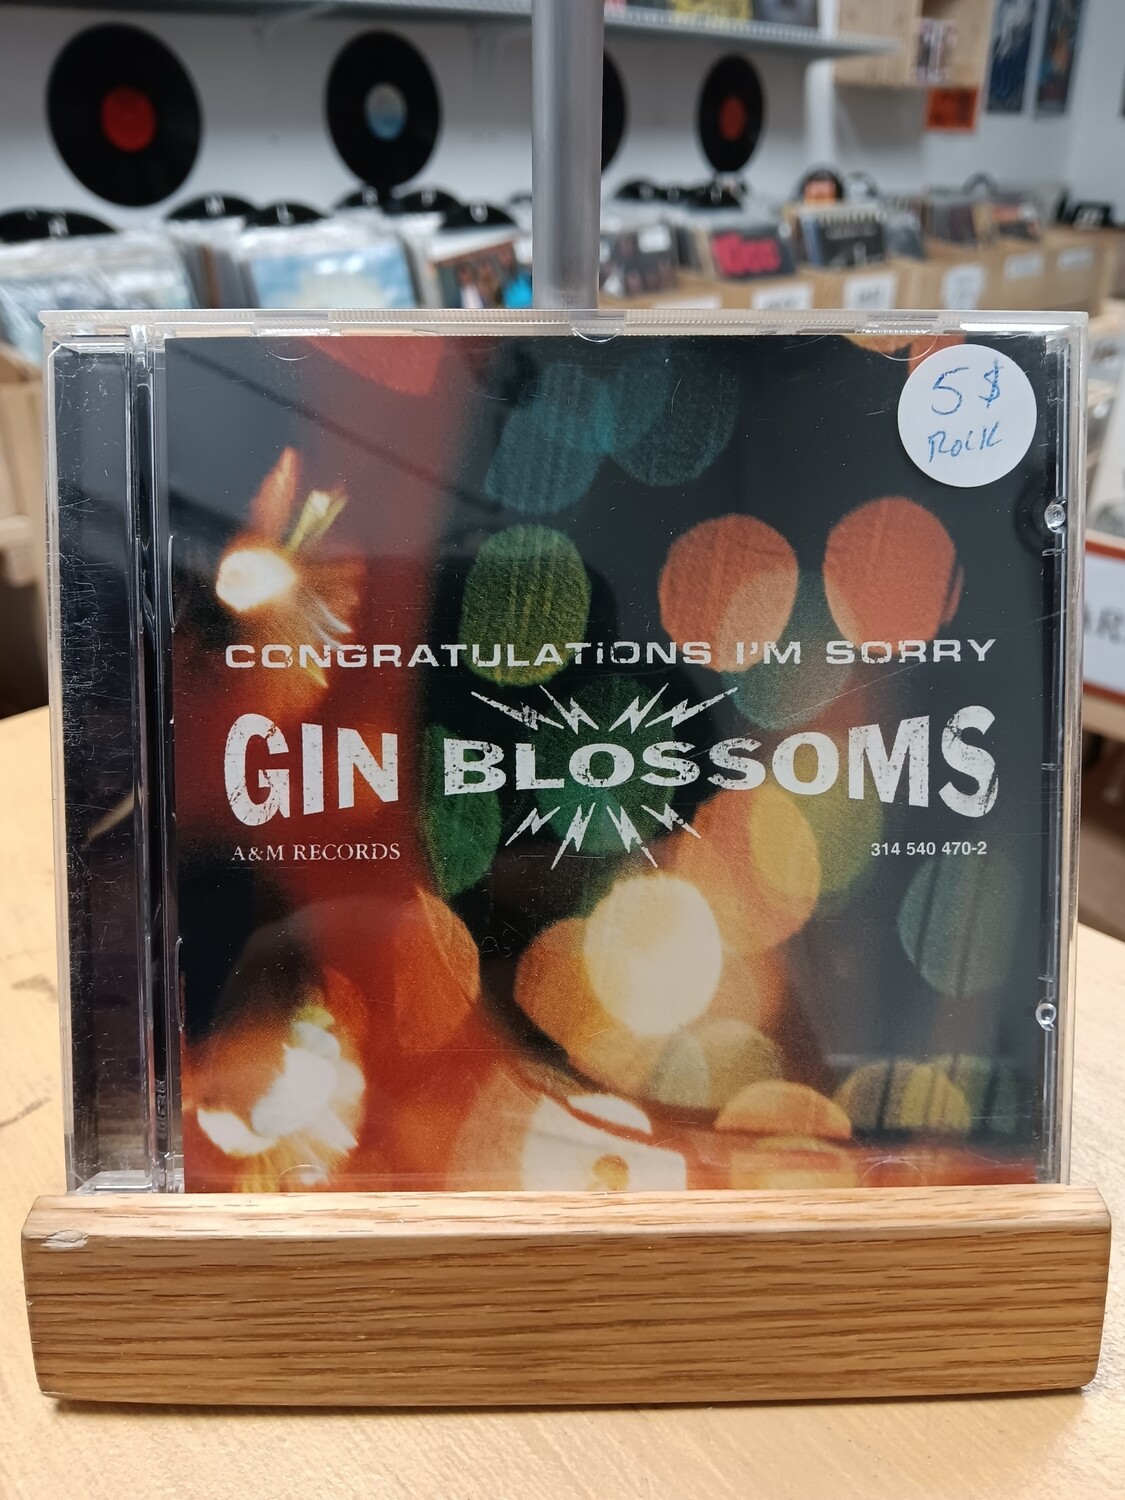 Gin Blossoms - Congratulations I'm sorry (CD)